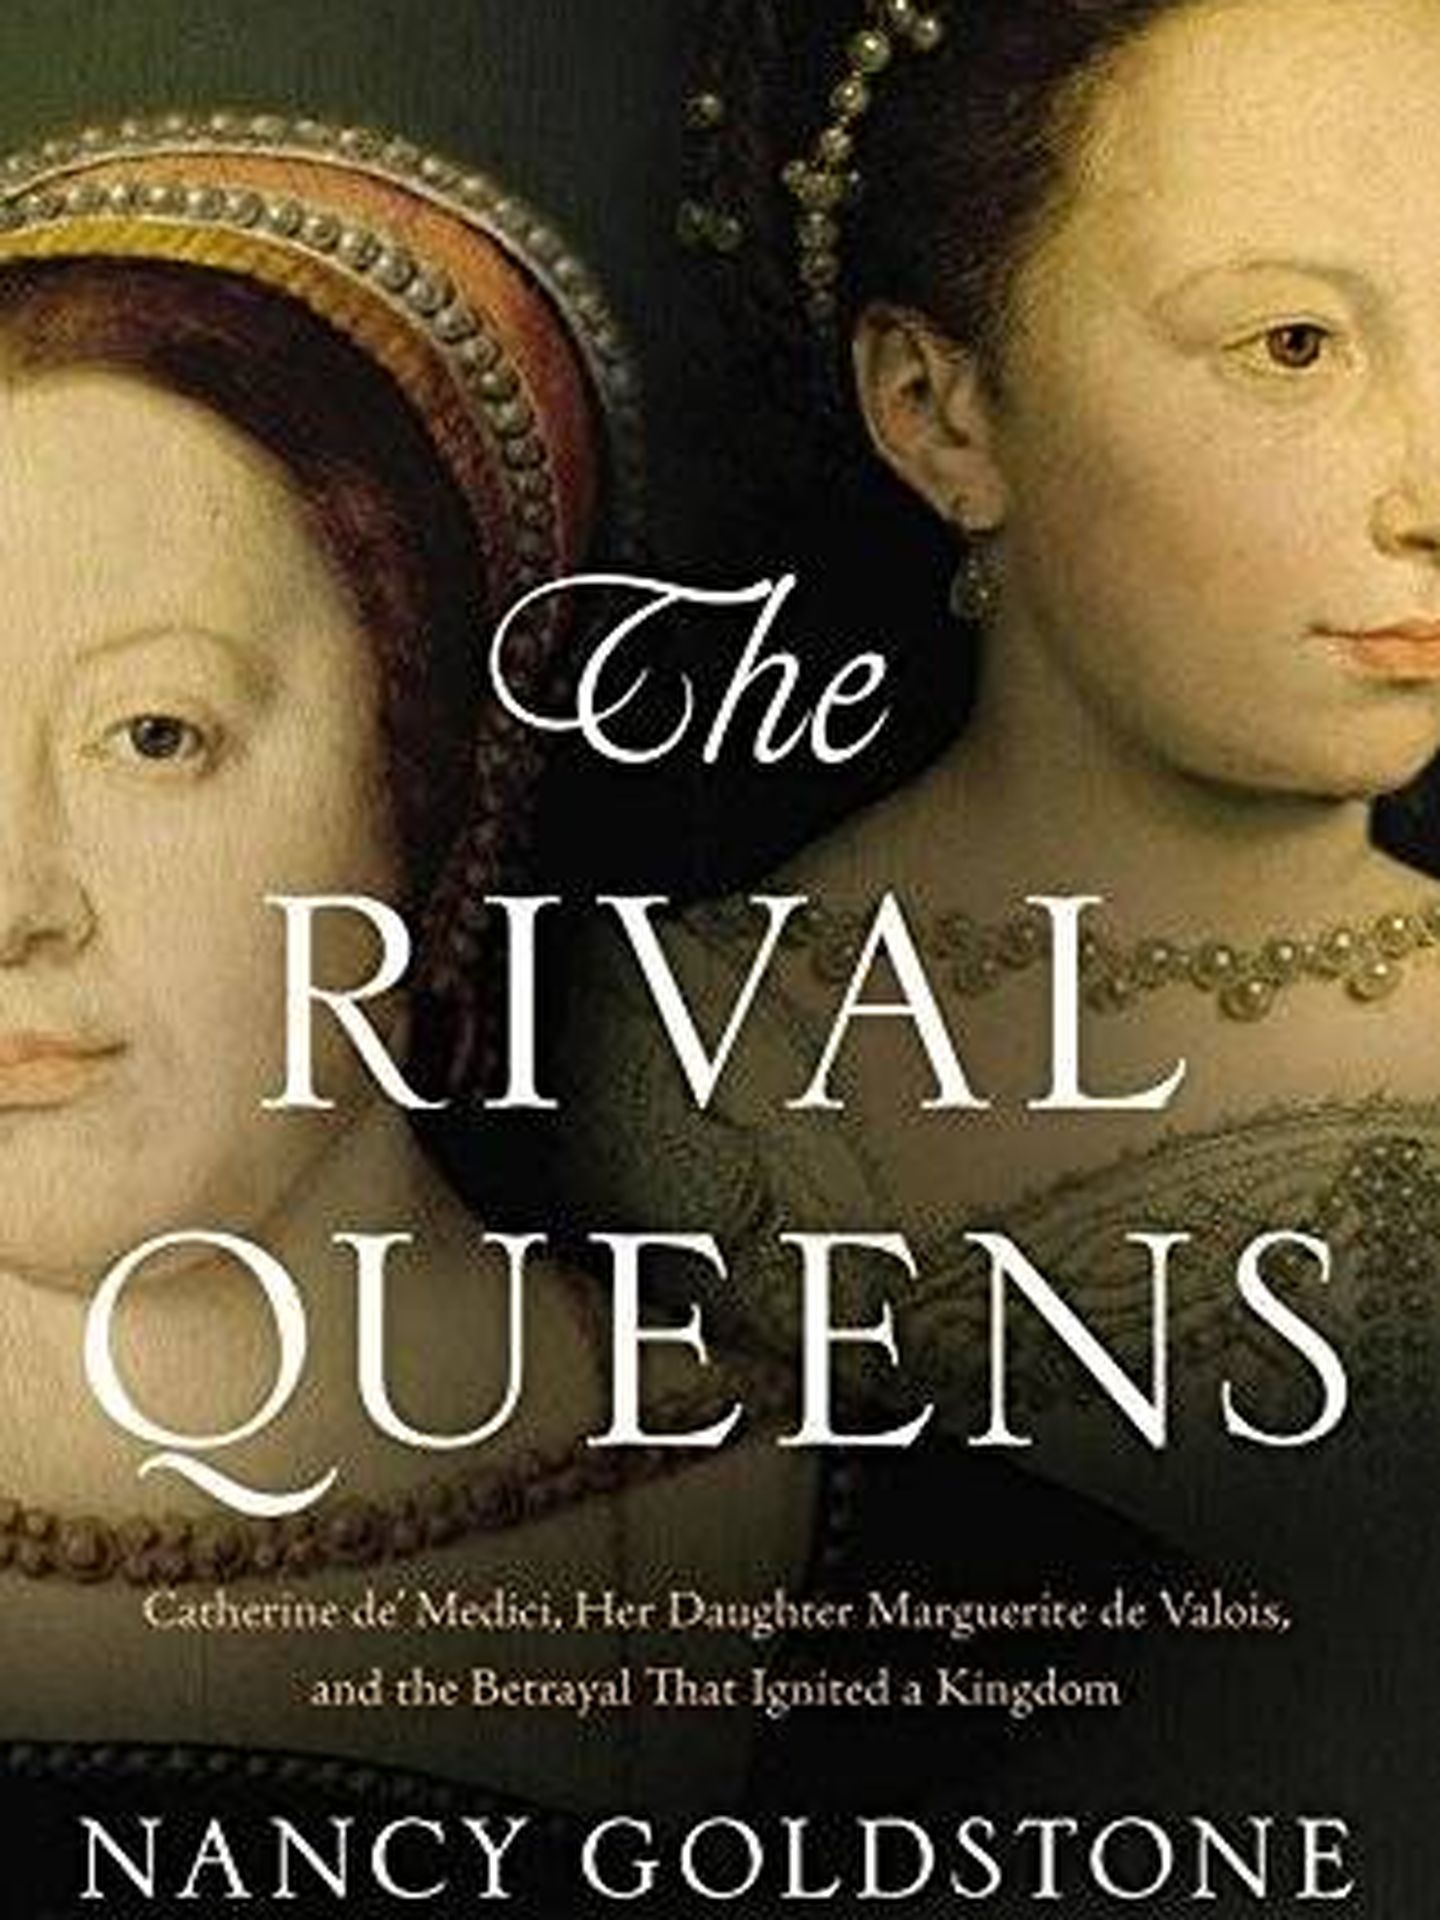   'The Rival Queens'. (Amazon)